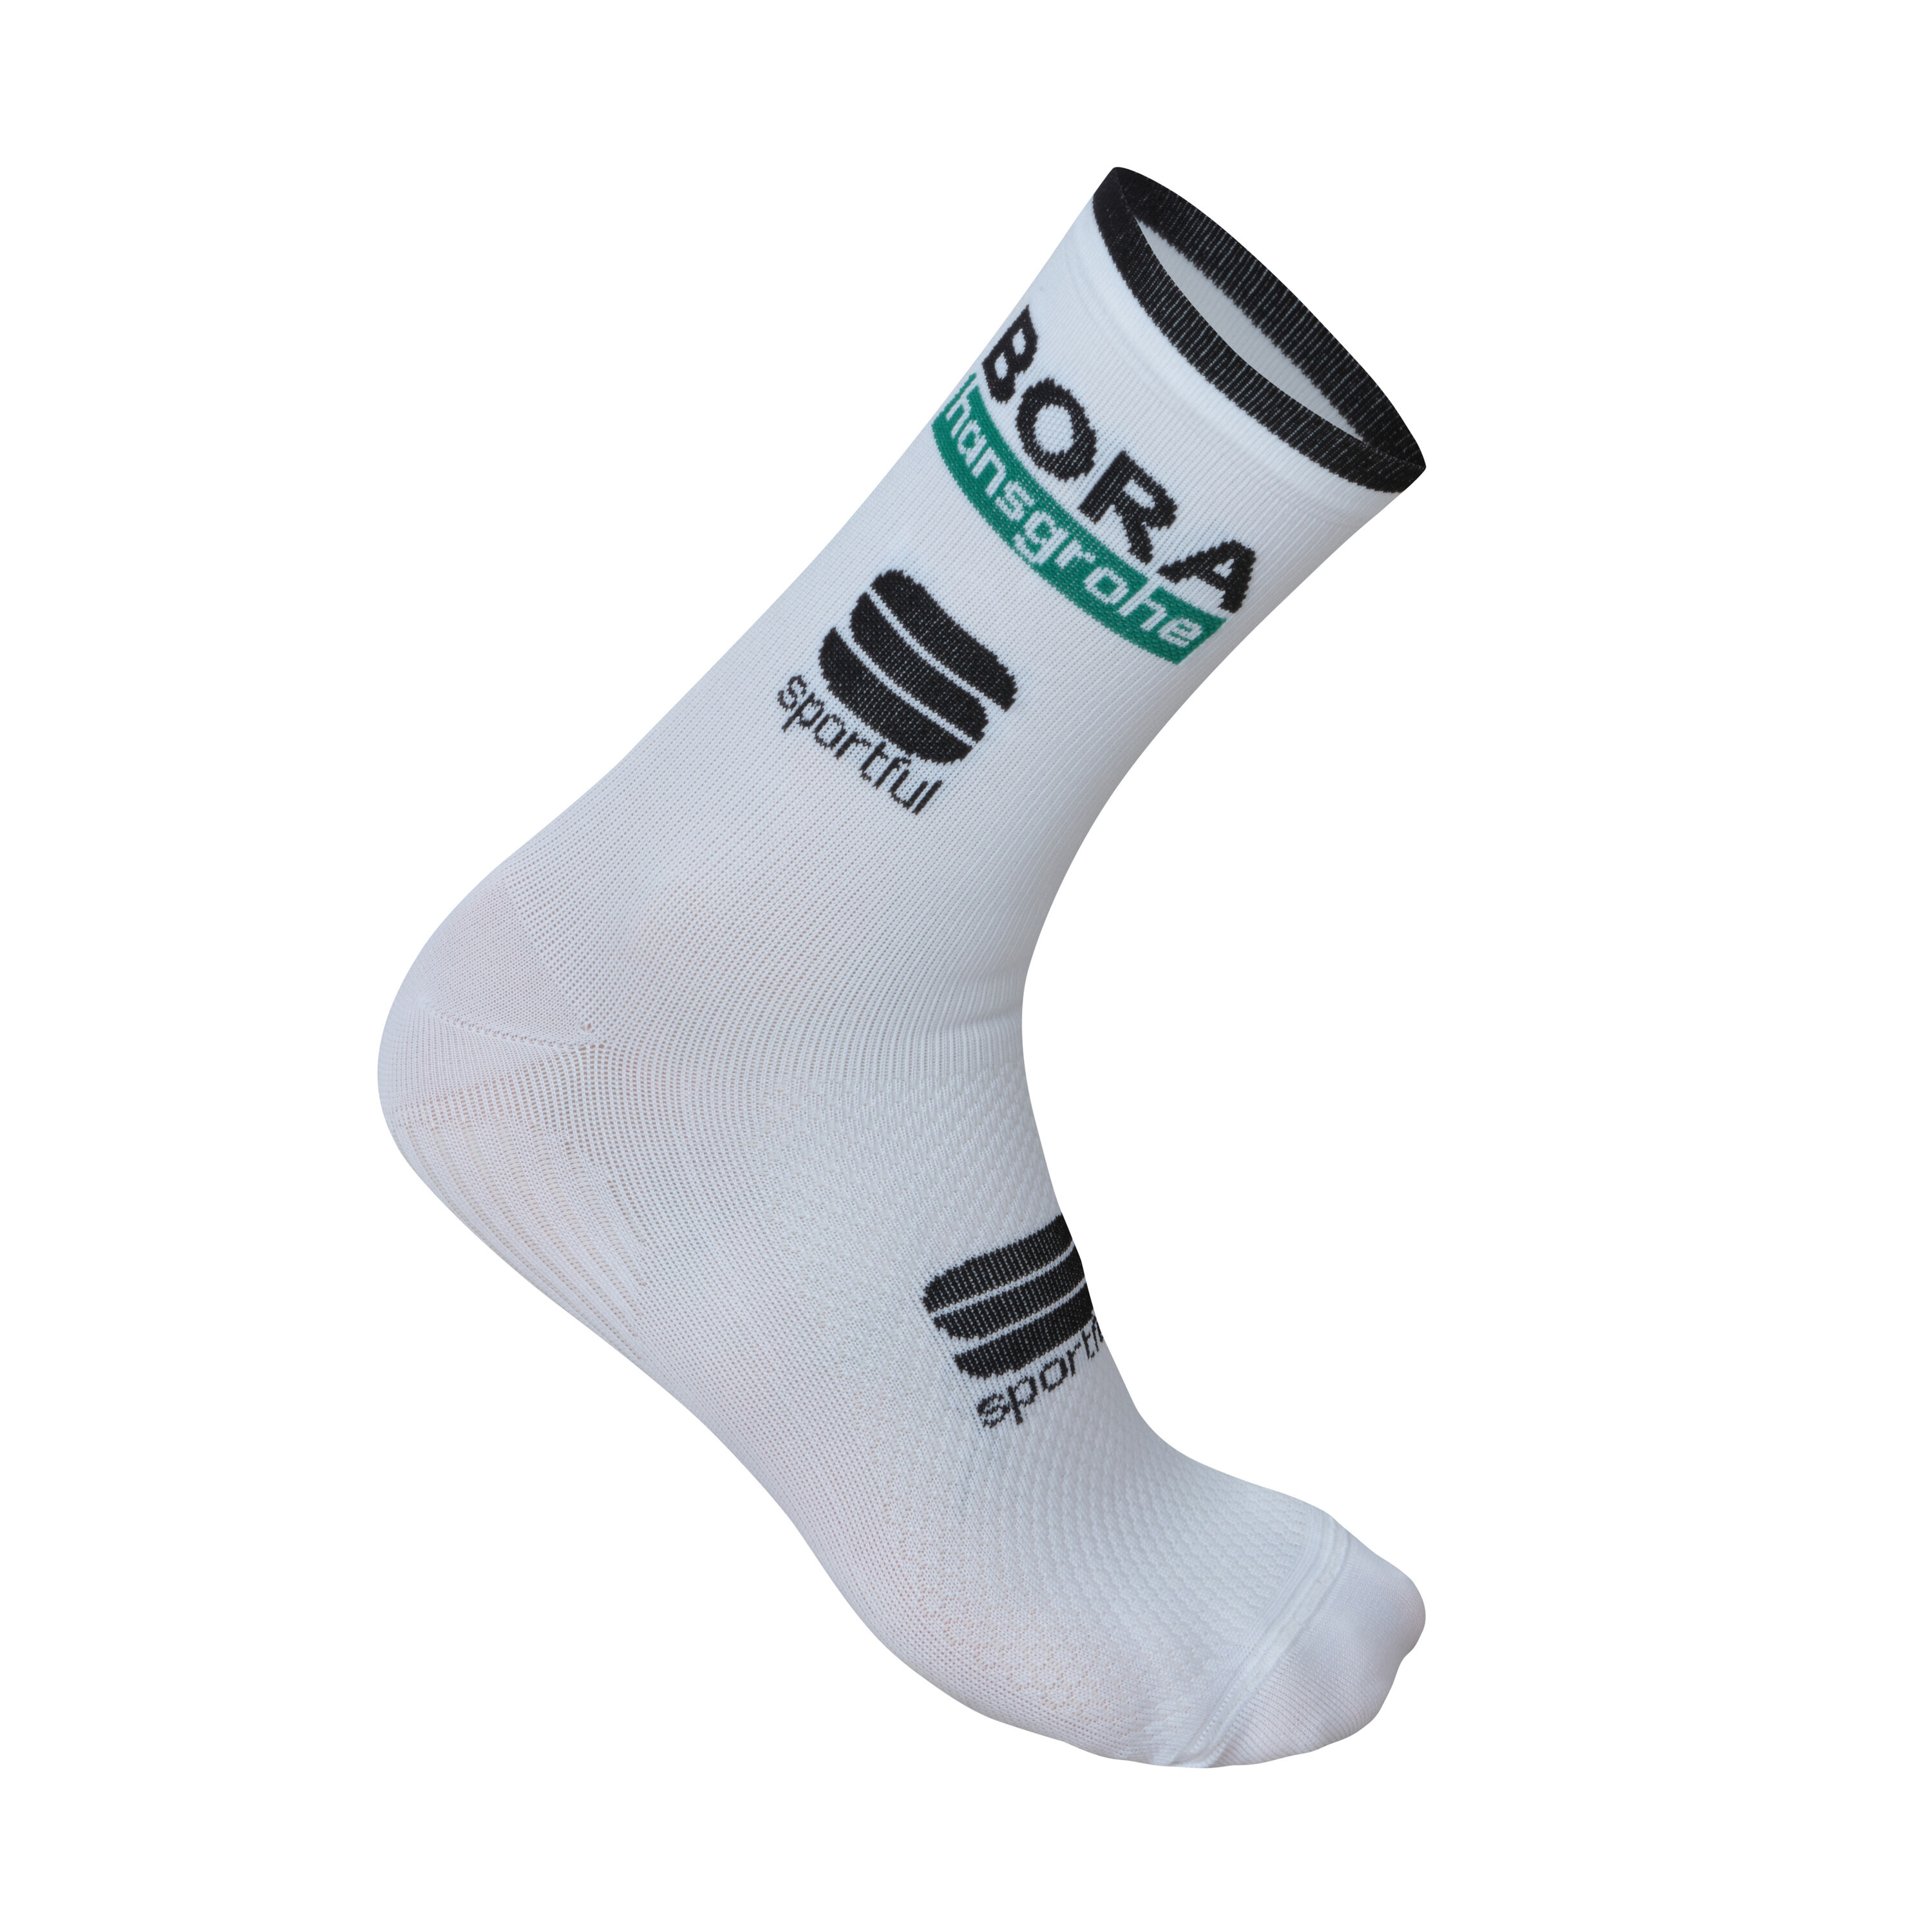 Sportful Bora Hansgrohe Team Race Socks - Calcetines ciclismo